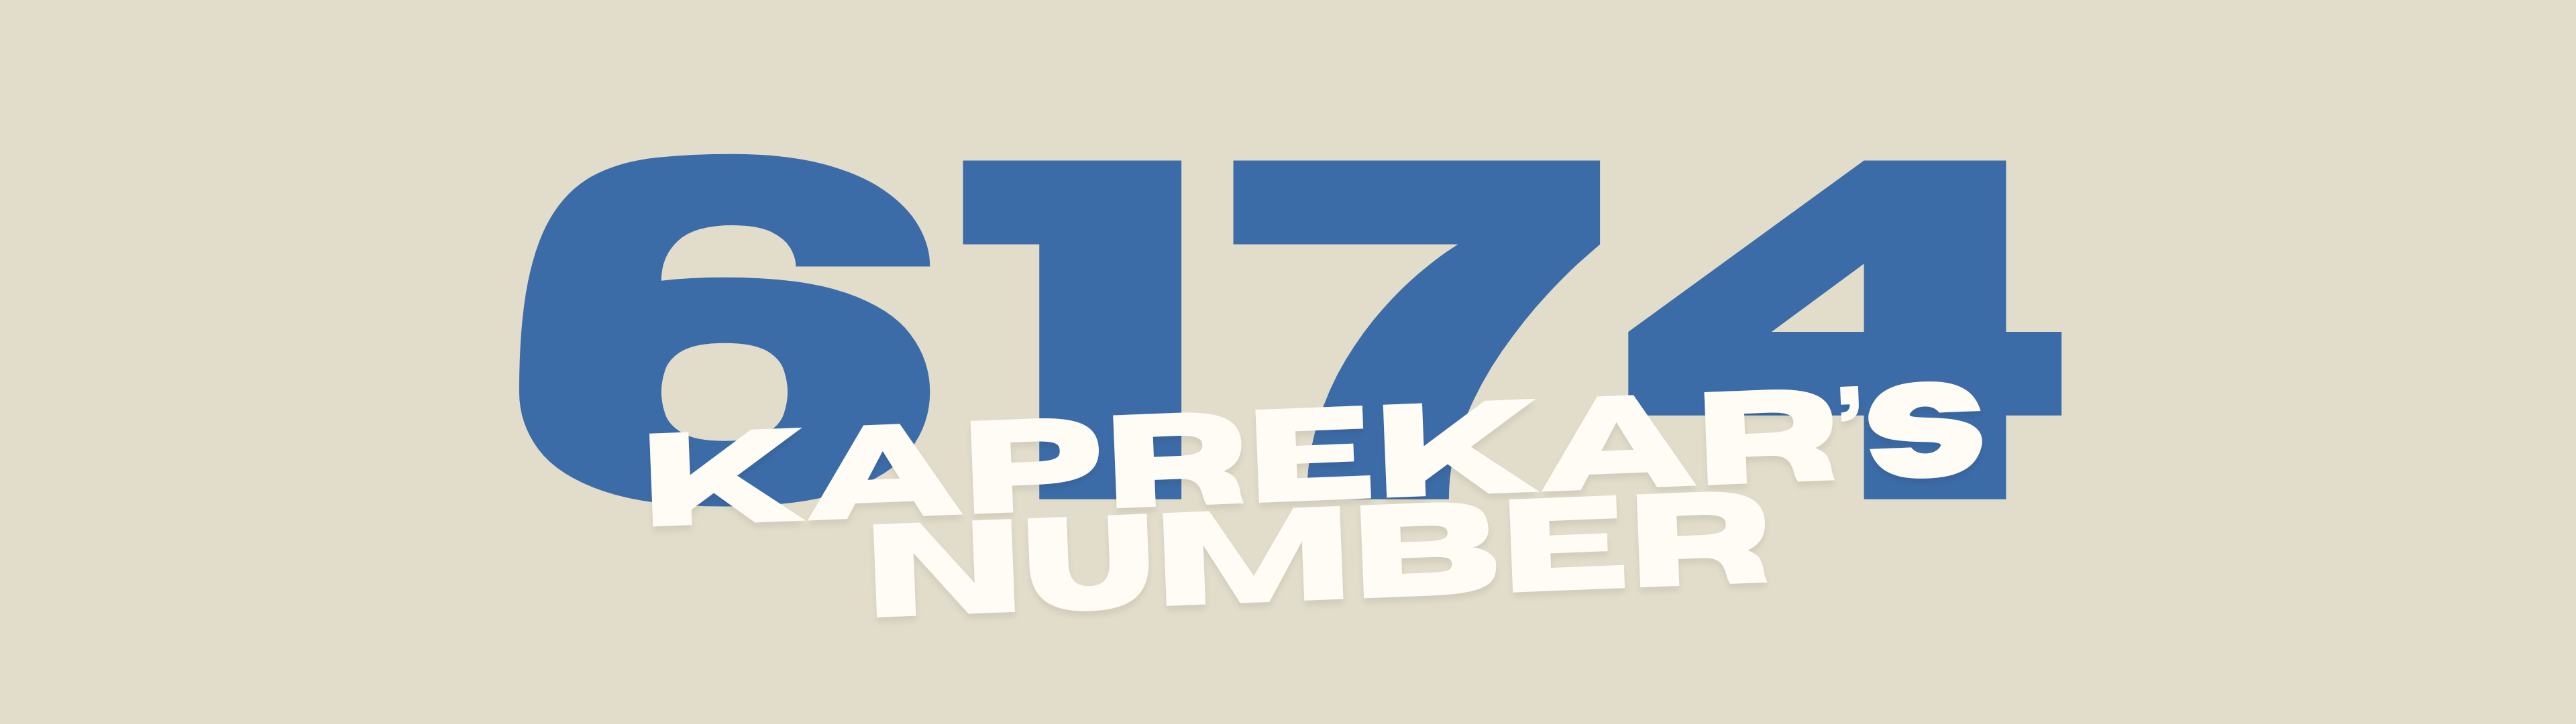 6174: Kaprekar's Number